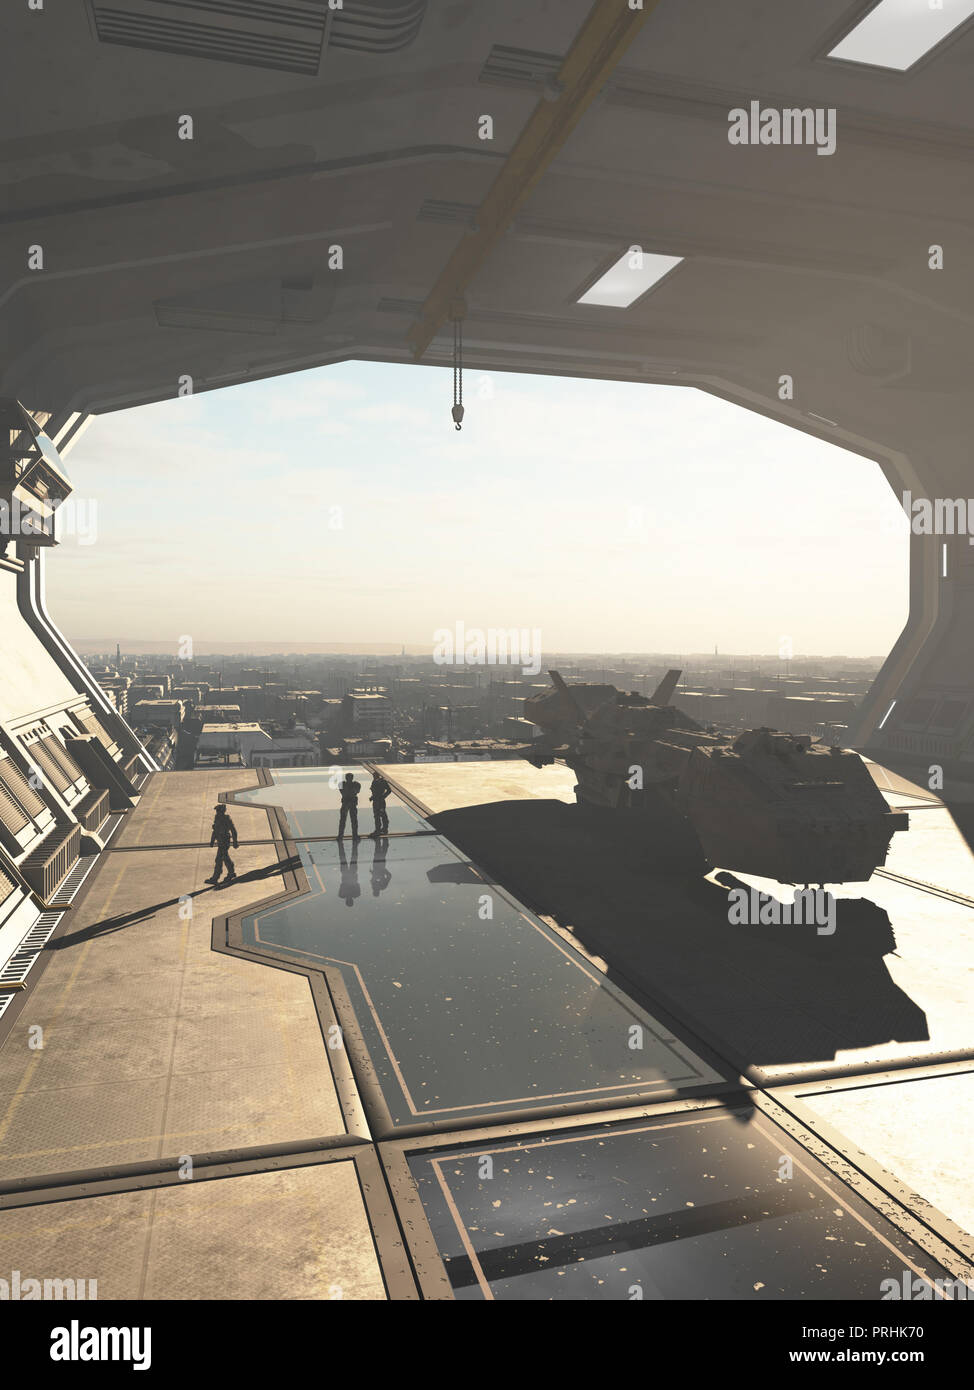 Spaceship Hangar overlooking a Future City Stock Photo